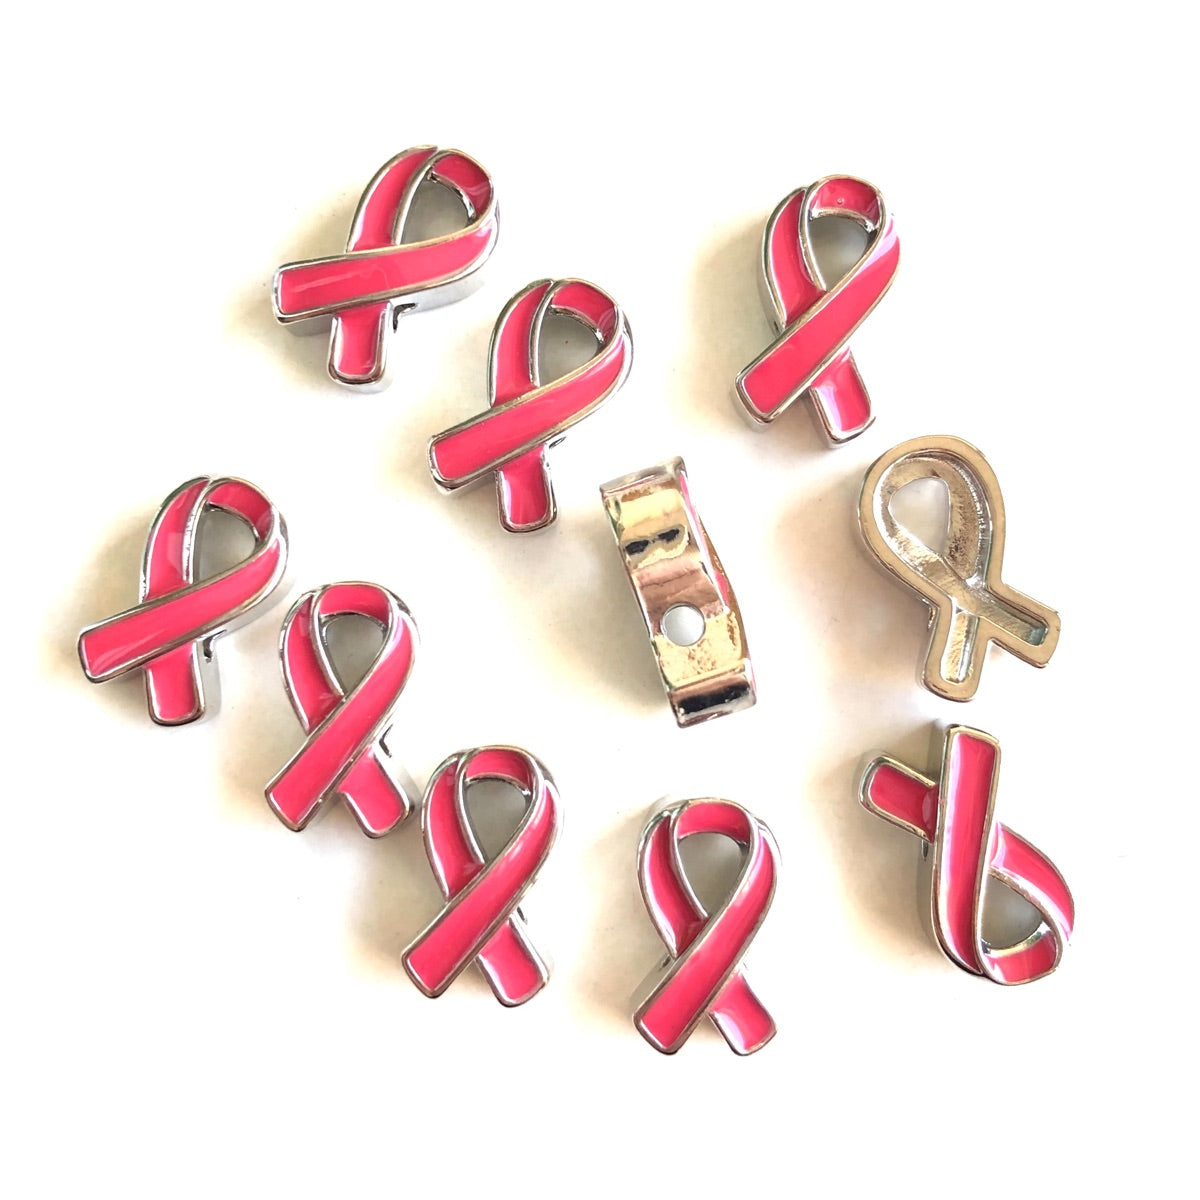 Cancer Awareness Ribbon, Pink Breast Cancer Awareness Ribbons